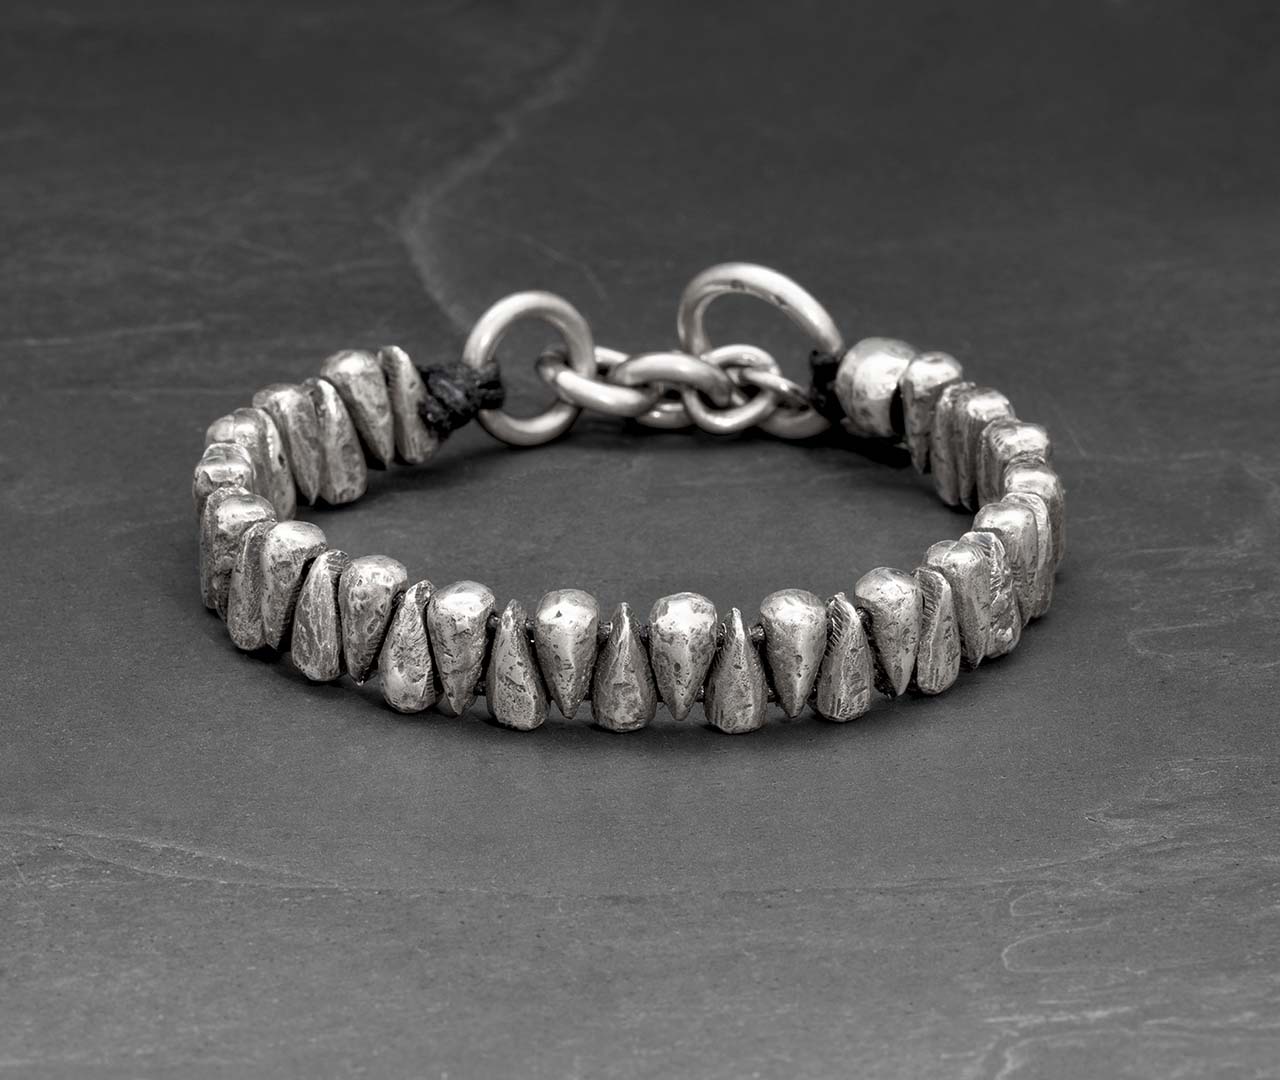 Narrow tear beads bracelet